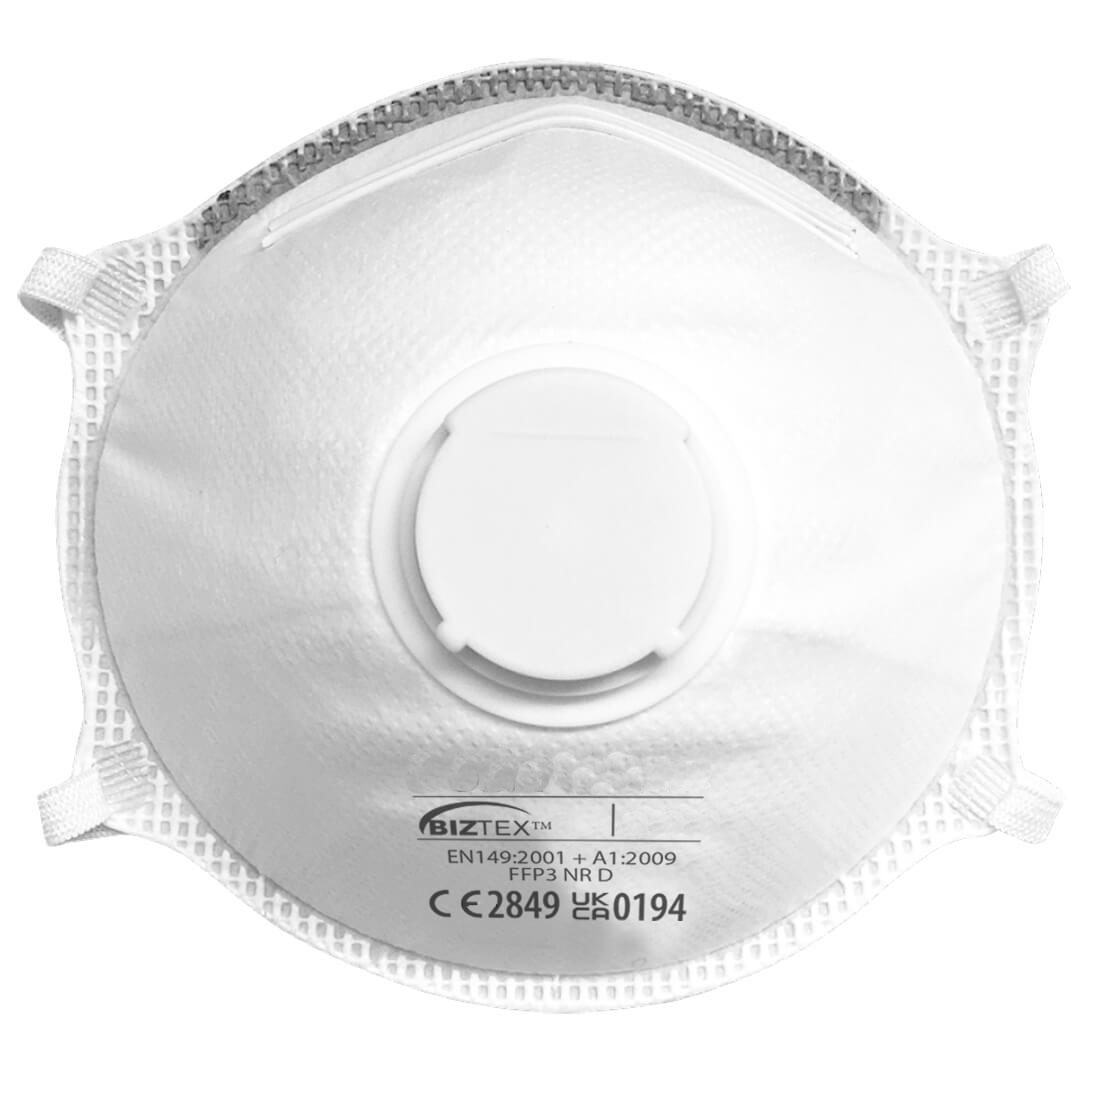 Lightweight Comfortable Breathable Valved Dolomite Light Cup Respirator FFP3 